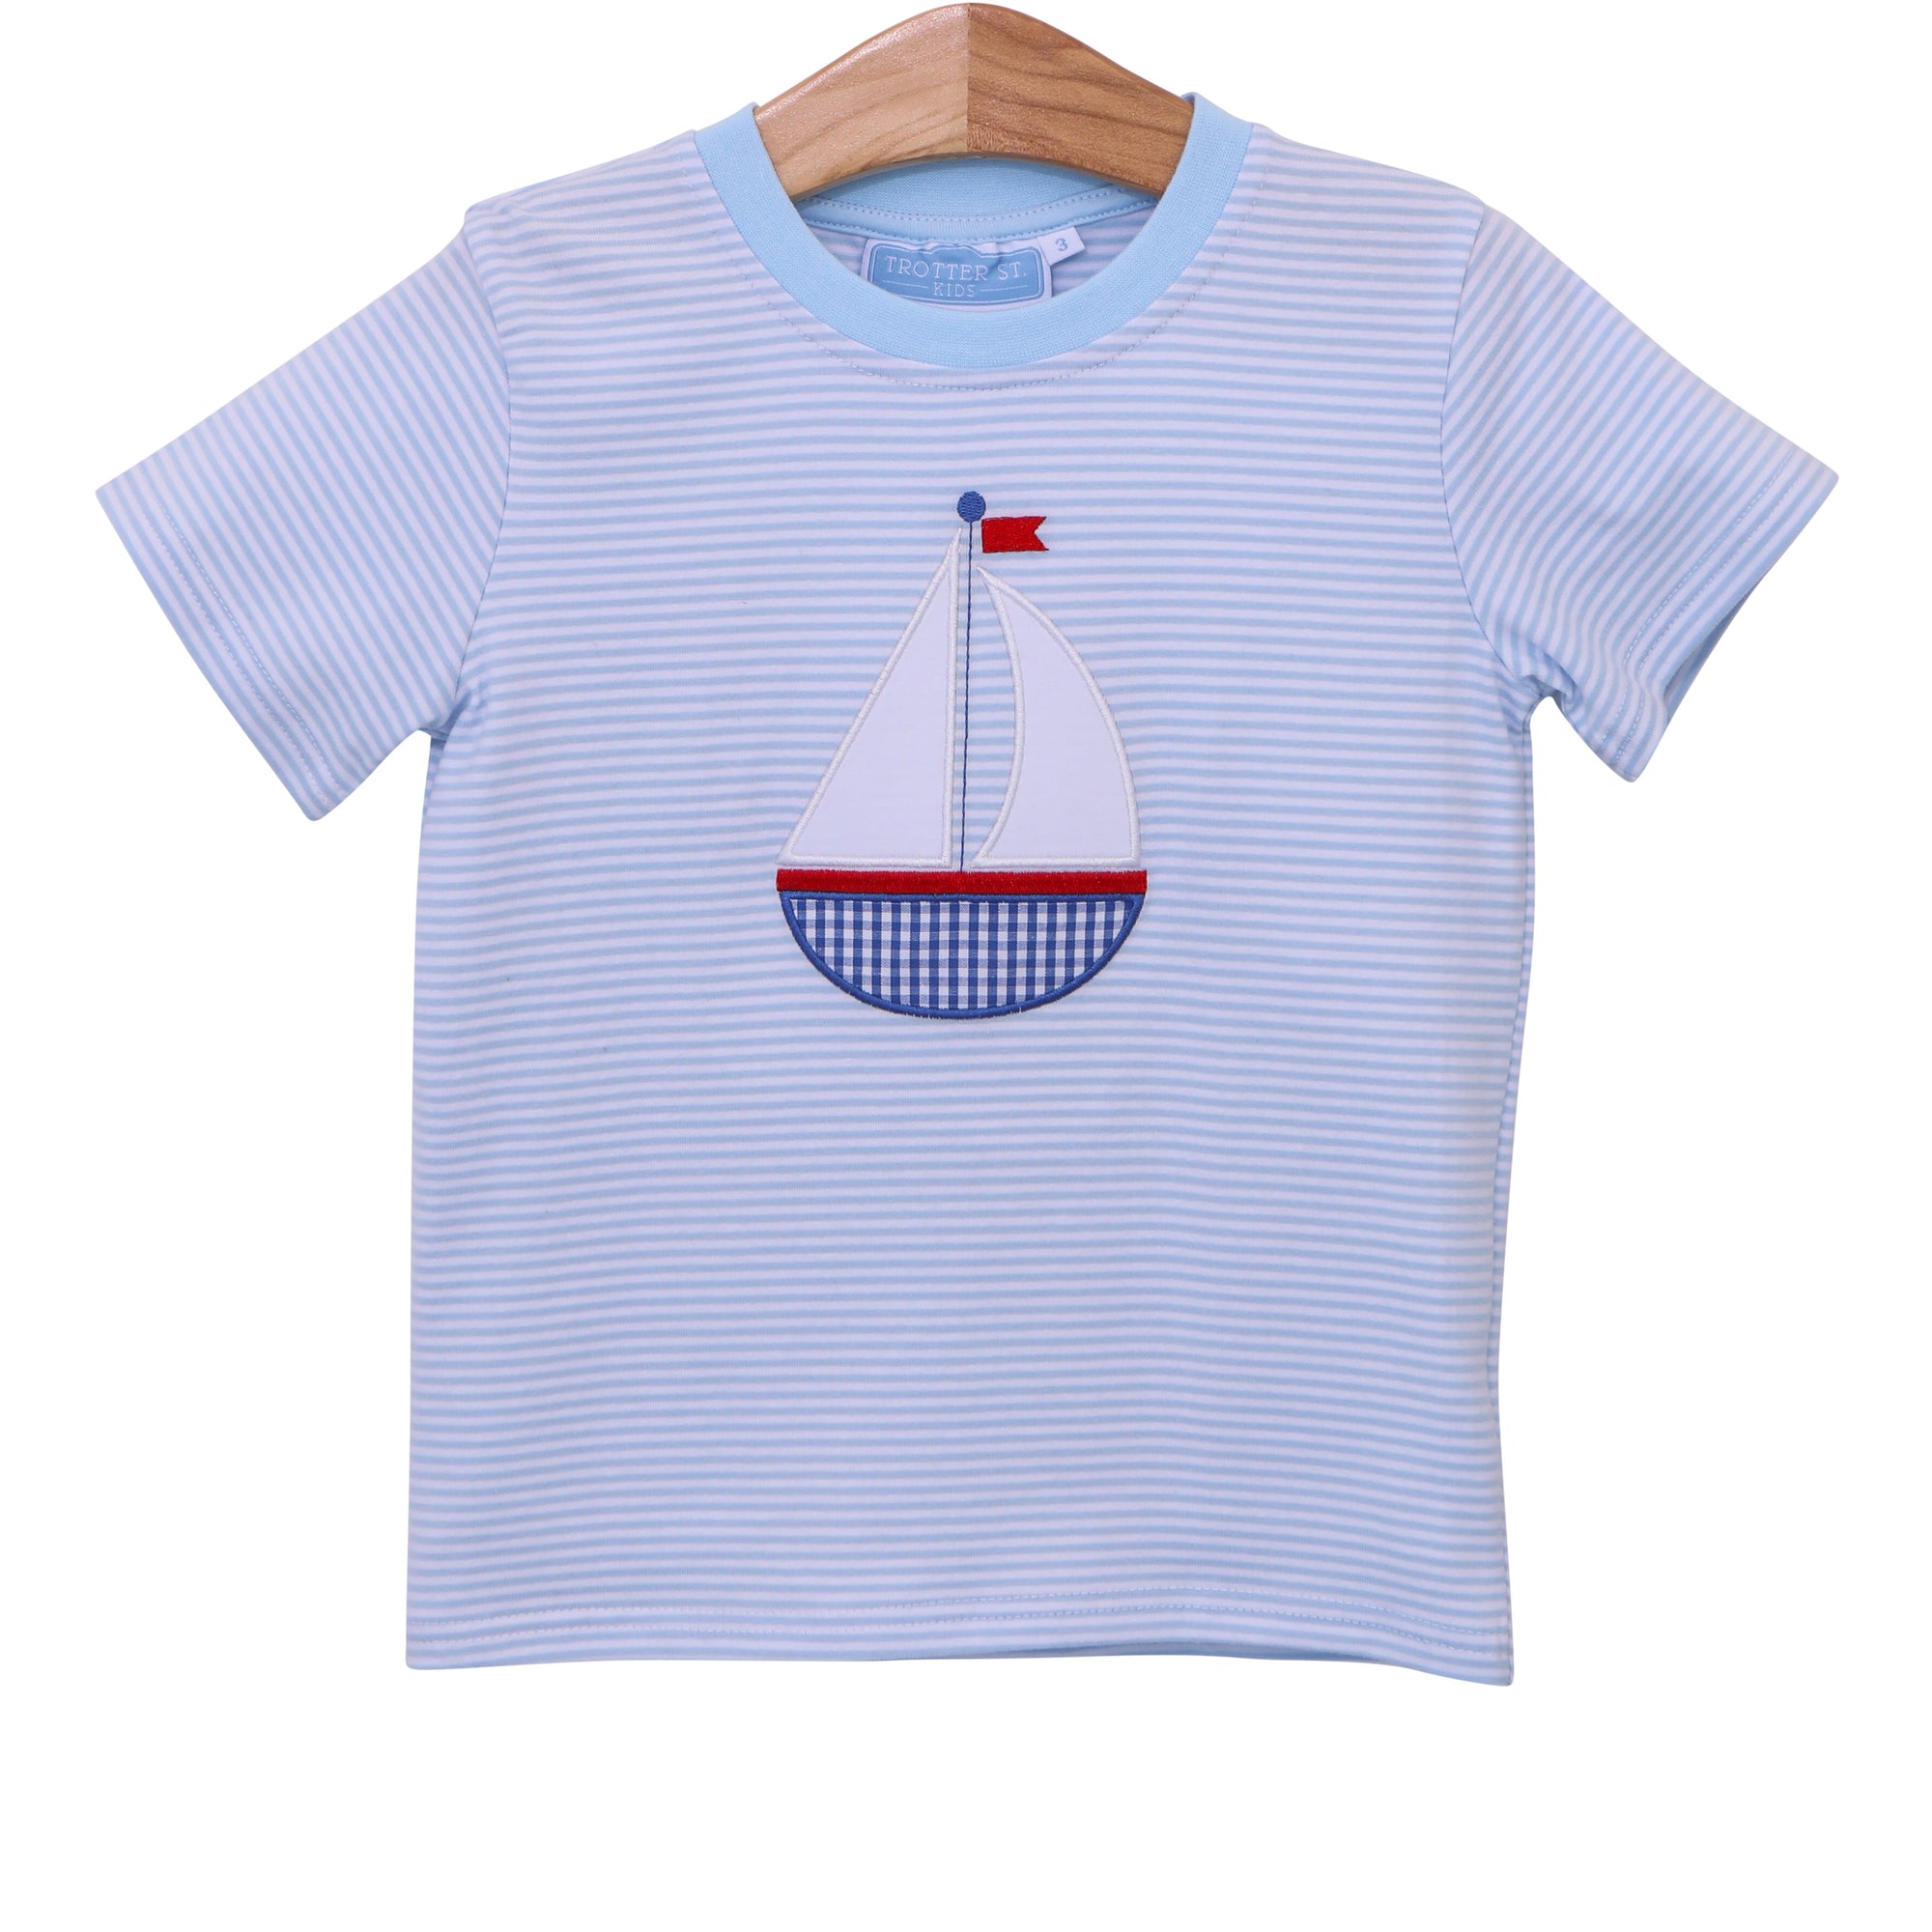 Sailboat Appliqued Shirt